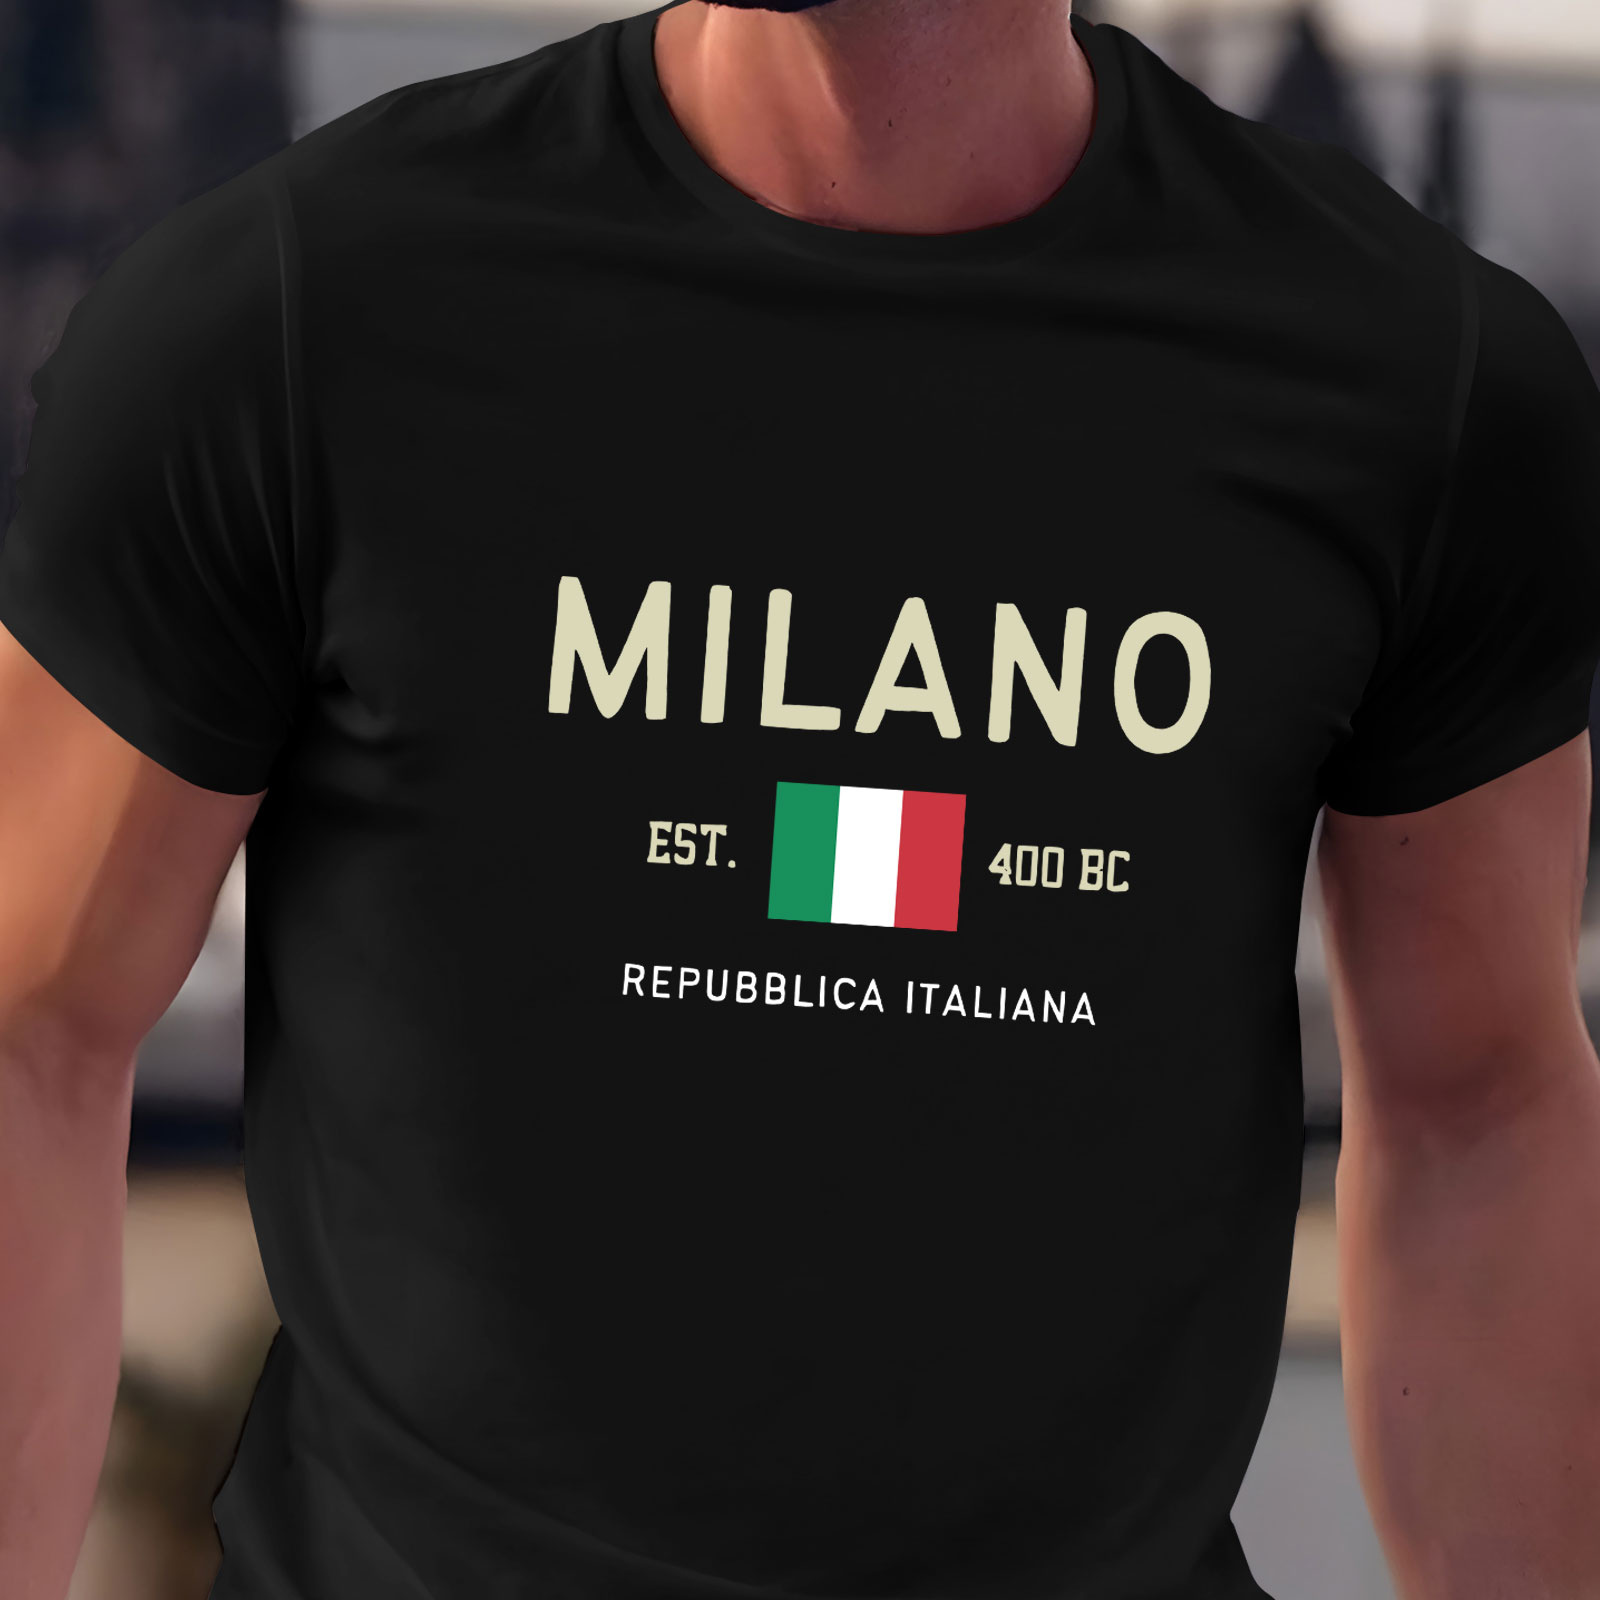 

Milano Letter Print Men's Crew Neck Short Sleeve T-shirt, Trendy Tees, Casual Comfortable Versatile Top For Summer, Outdoor Sports